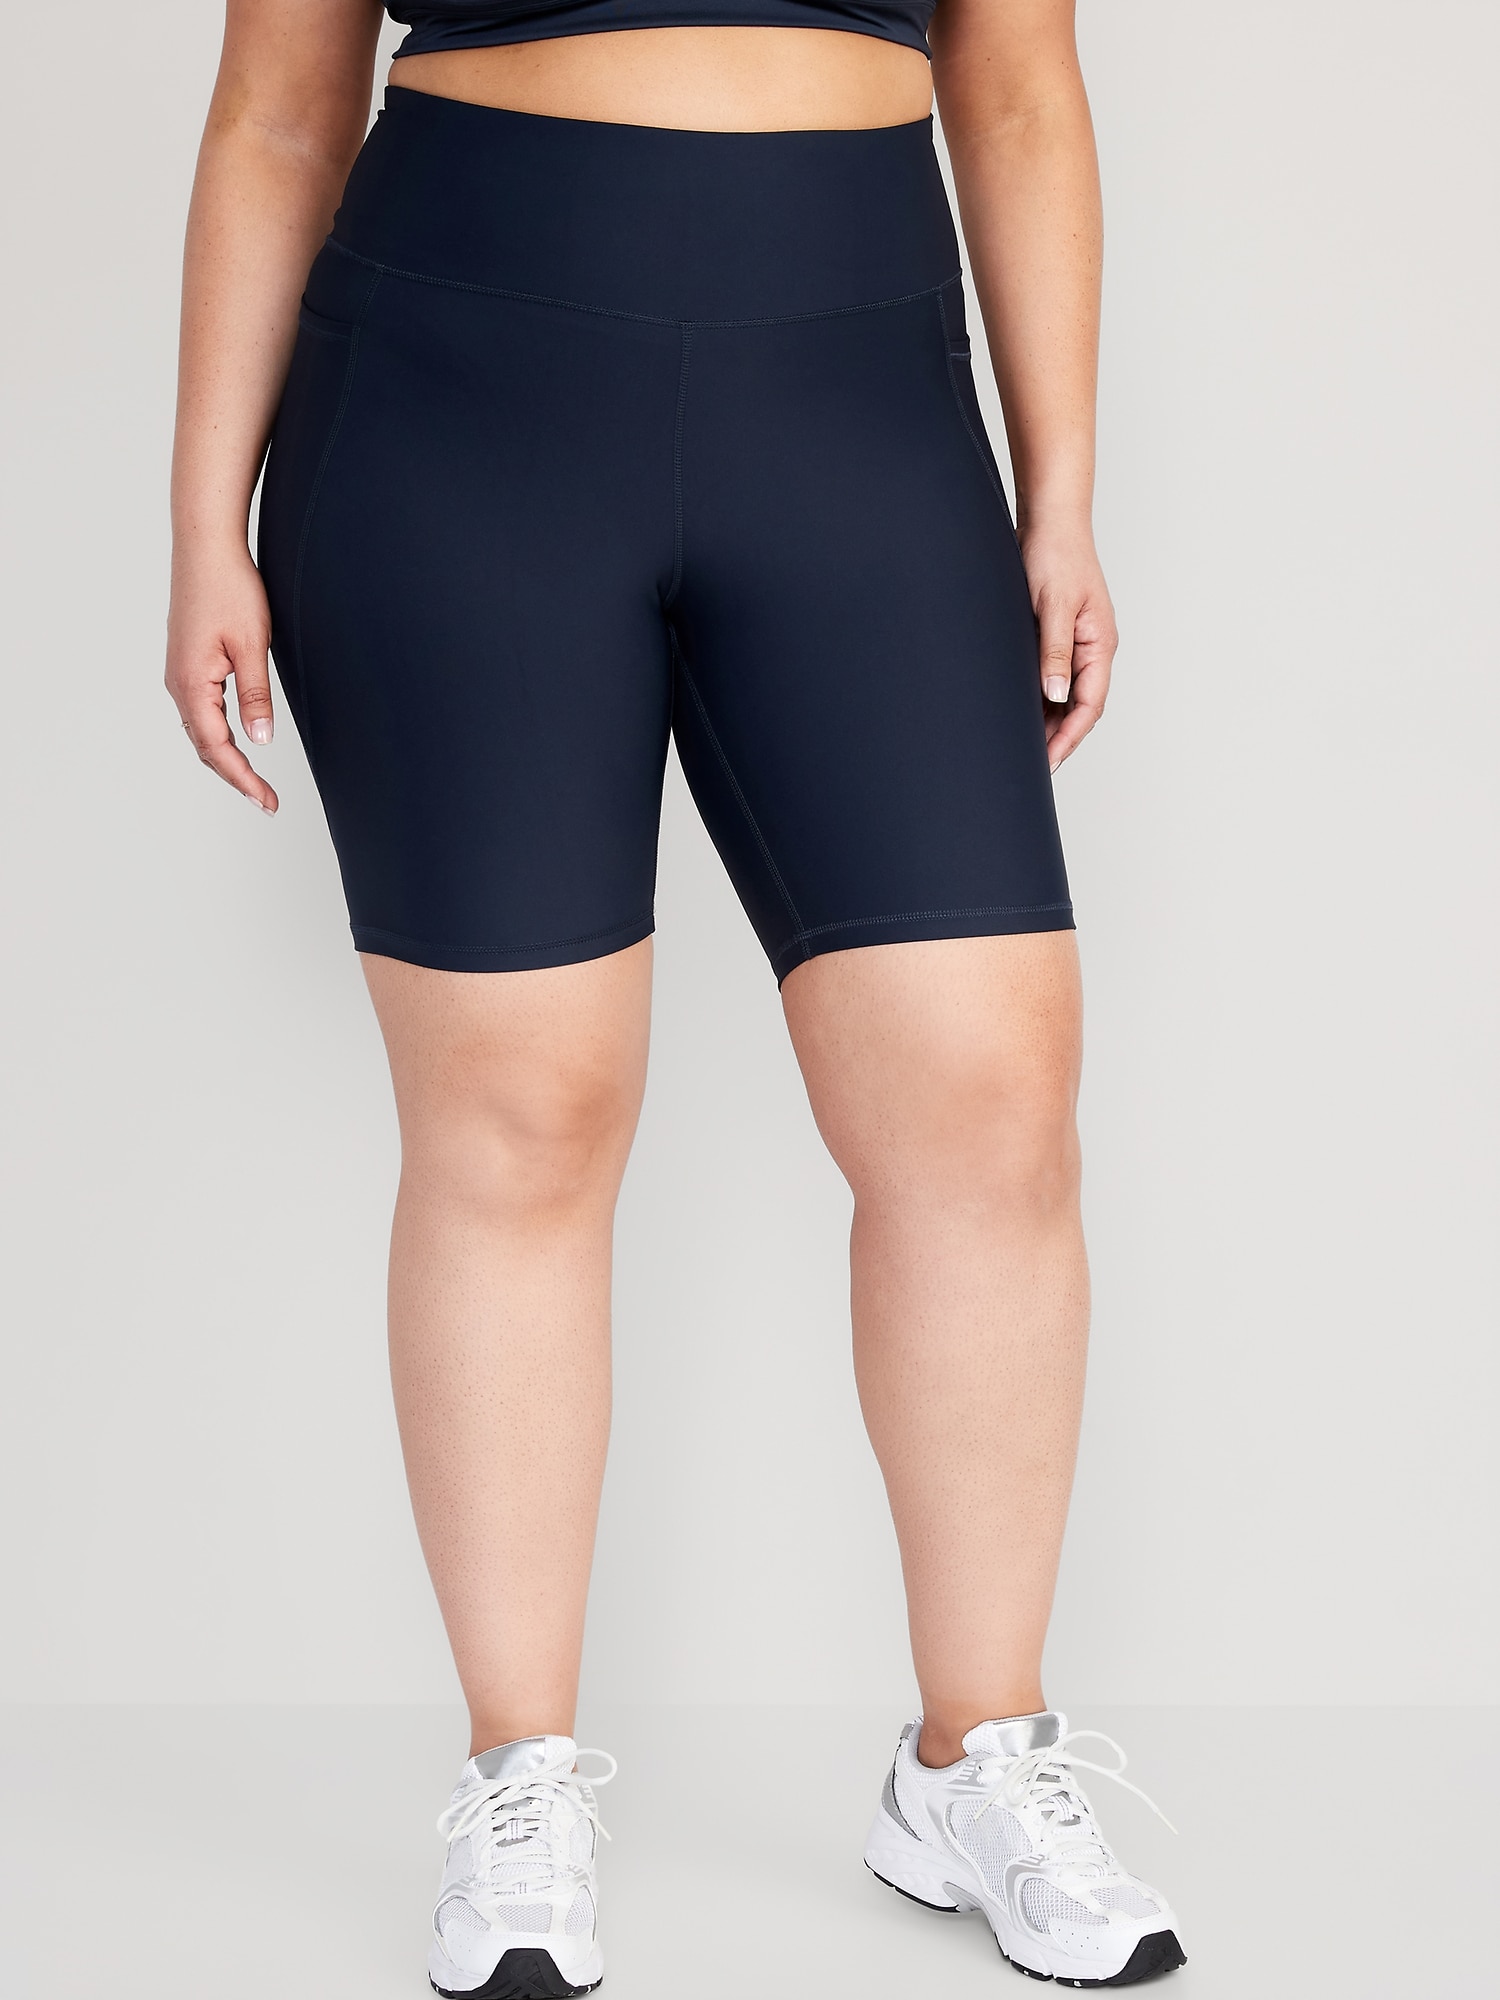 Skin Biker Shorts (8 in. inseam) - Black – Senita Athletics